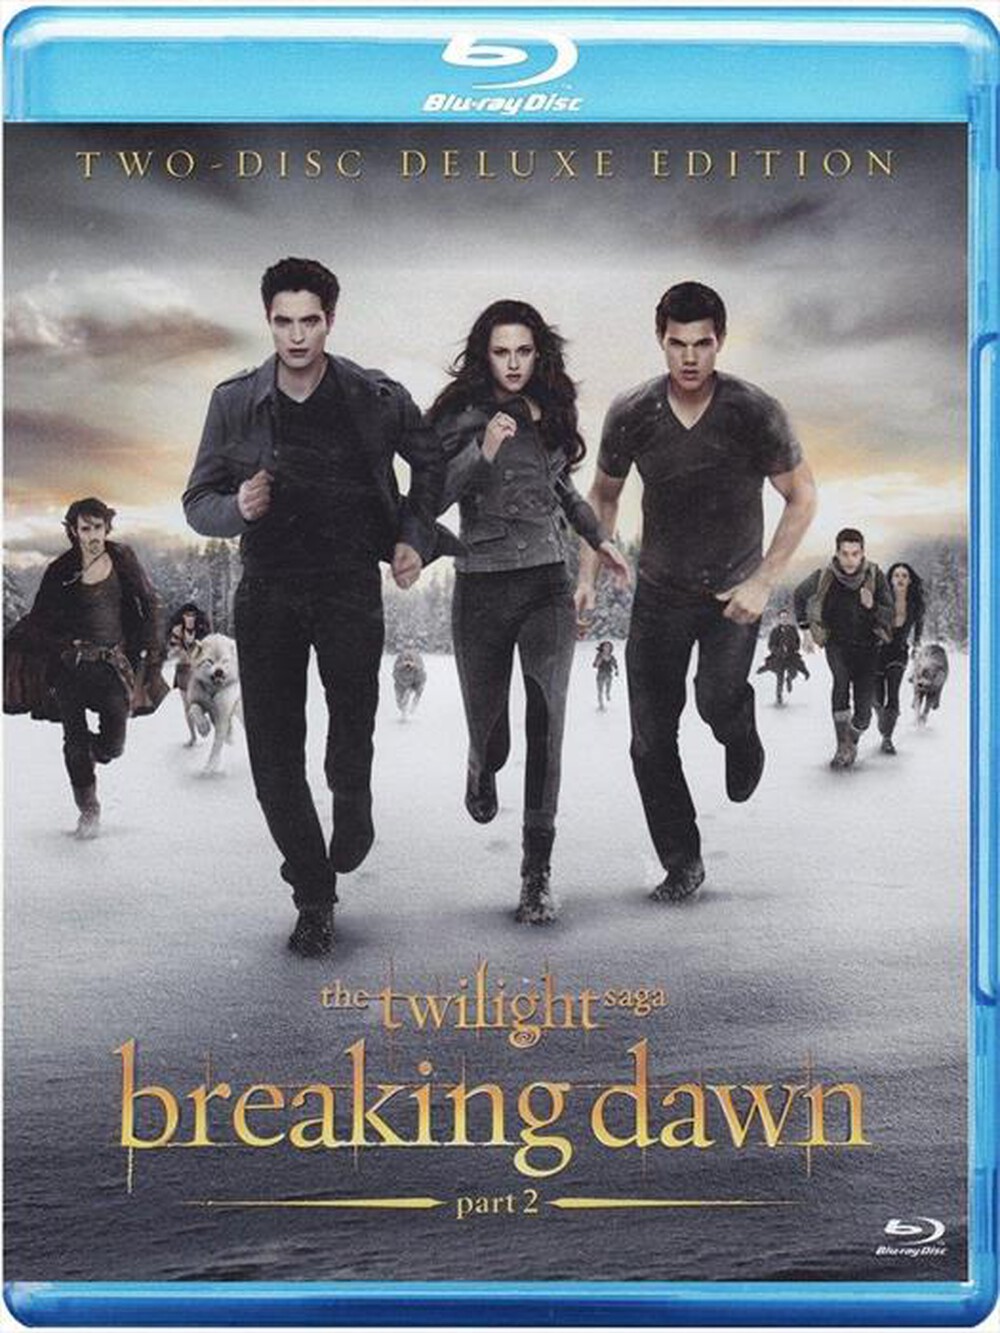 "EAGLE PICTURES - Breaking Dawn - Parte 2 - The Twilight Saga (Del - "